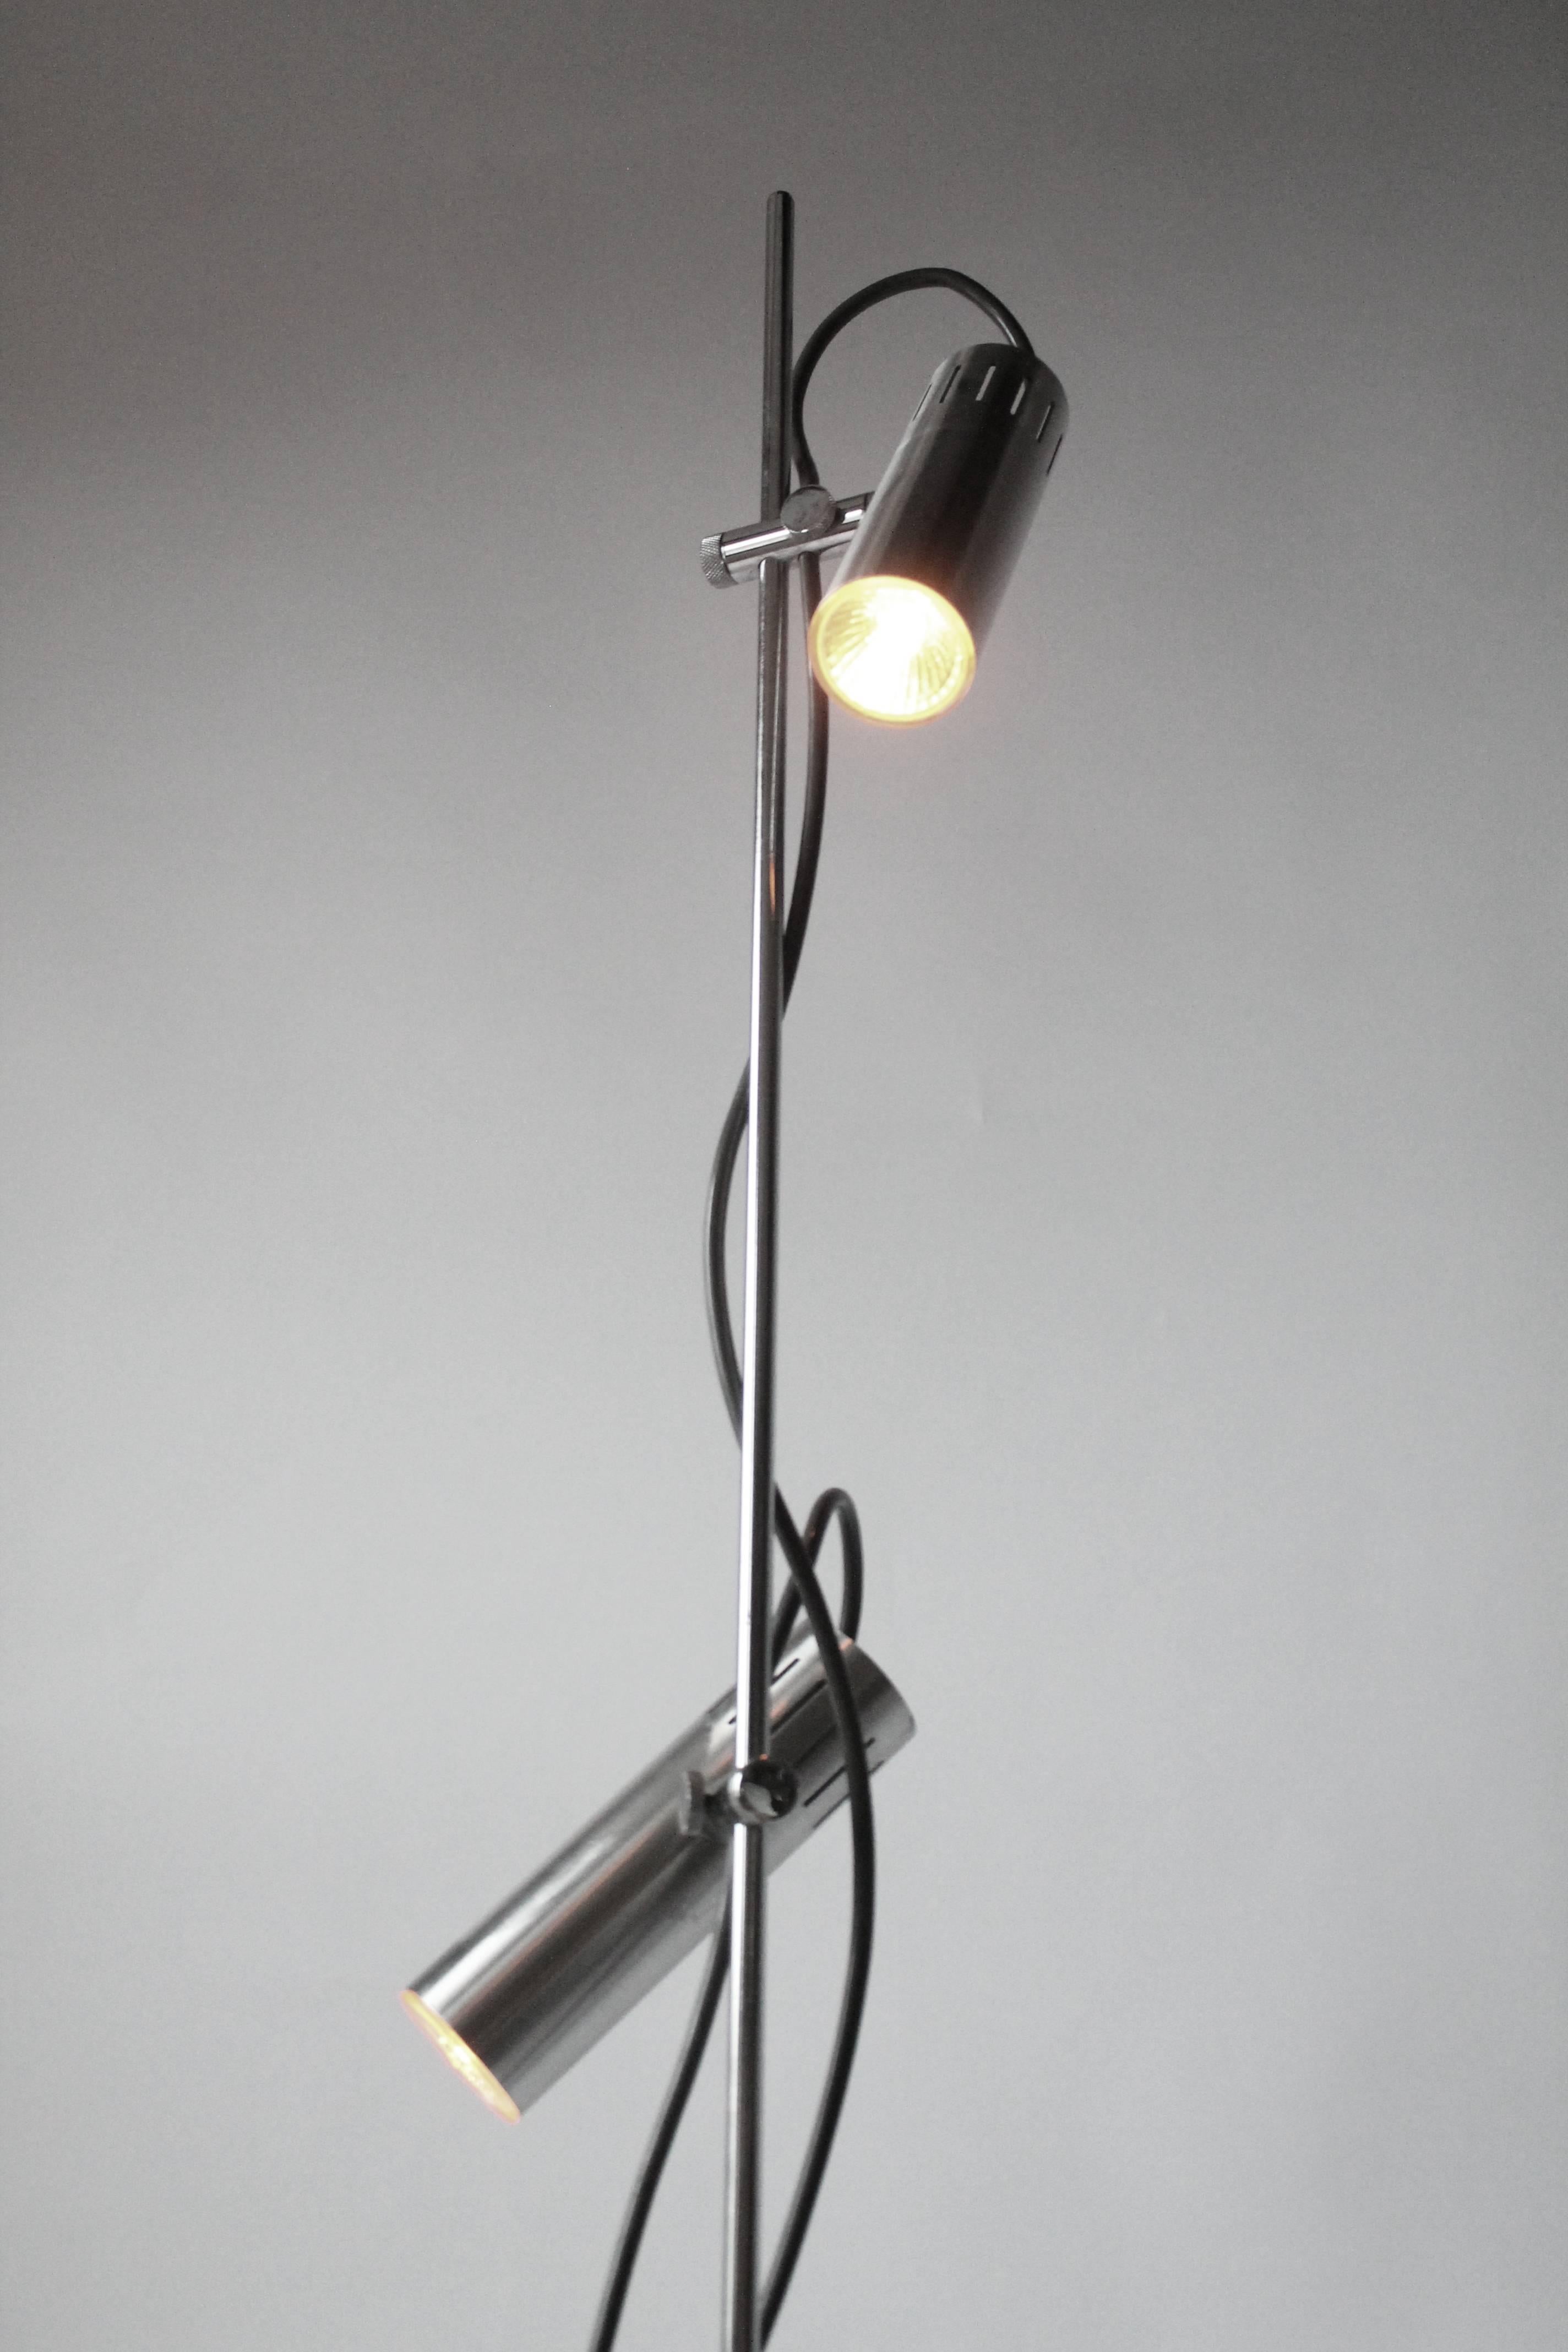 French Alain Richard A14 by Disderot Twin Shade Chromed Floor Lamp, 1959, France